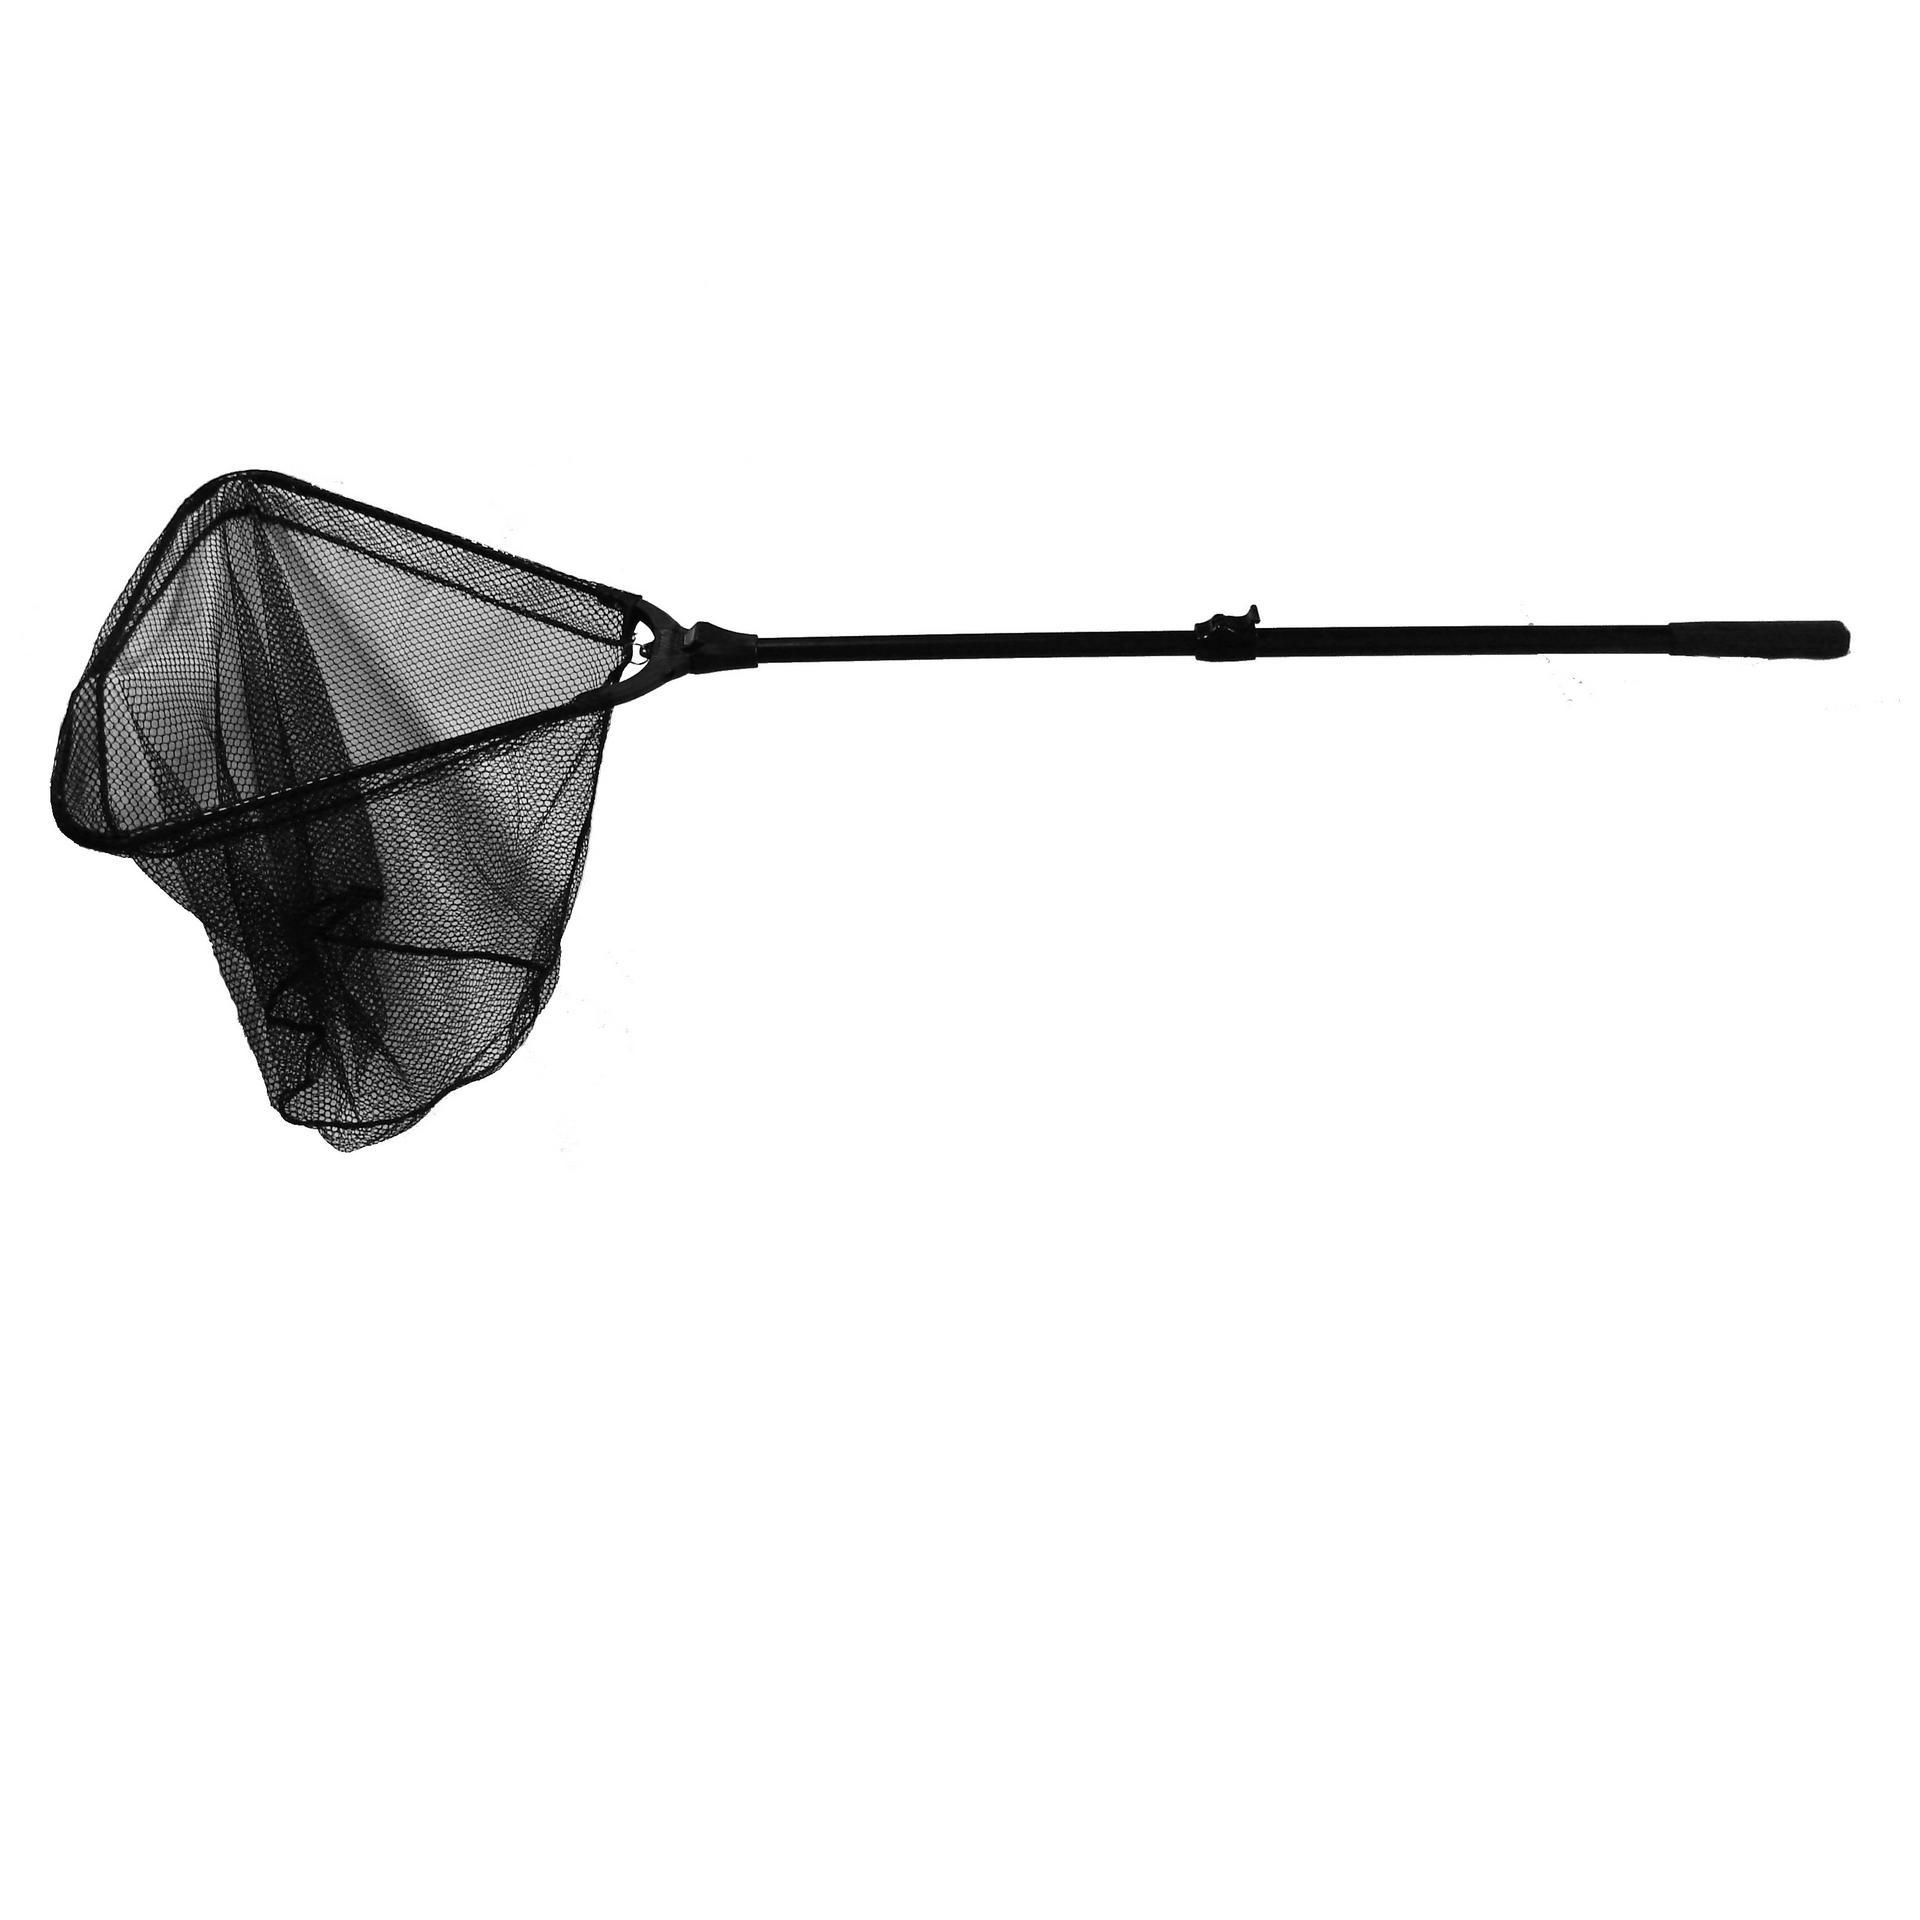 Frabill Umbrella Drop Net – Natural Sports - The Fishing Store